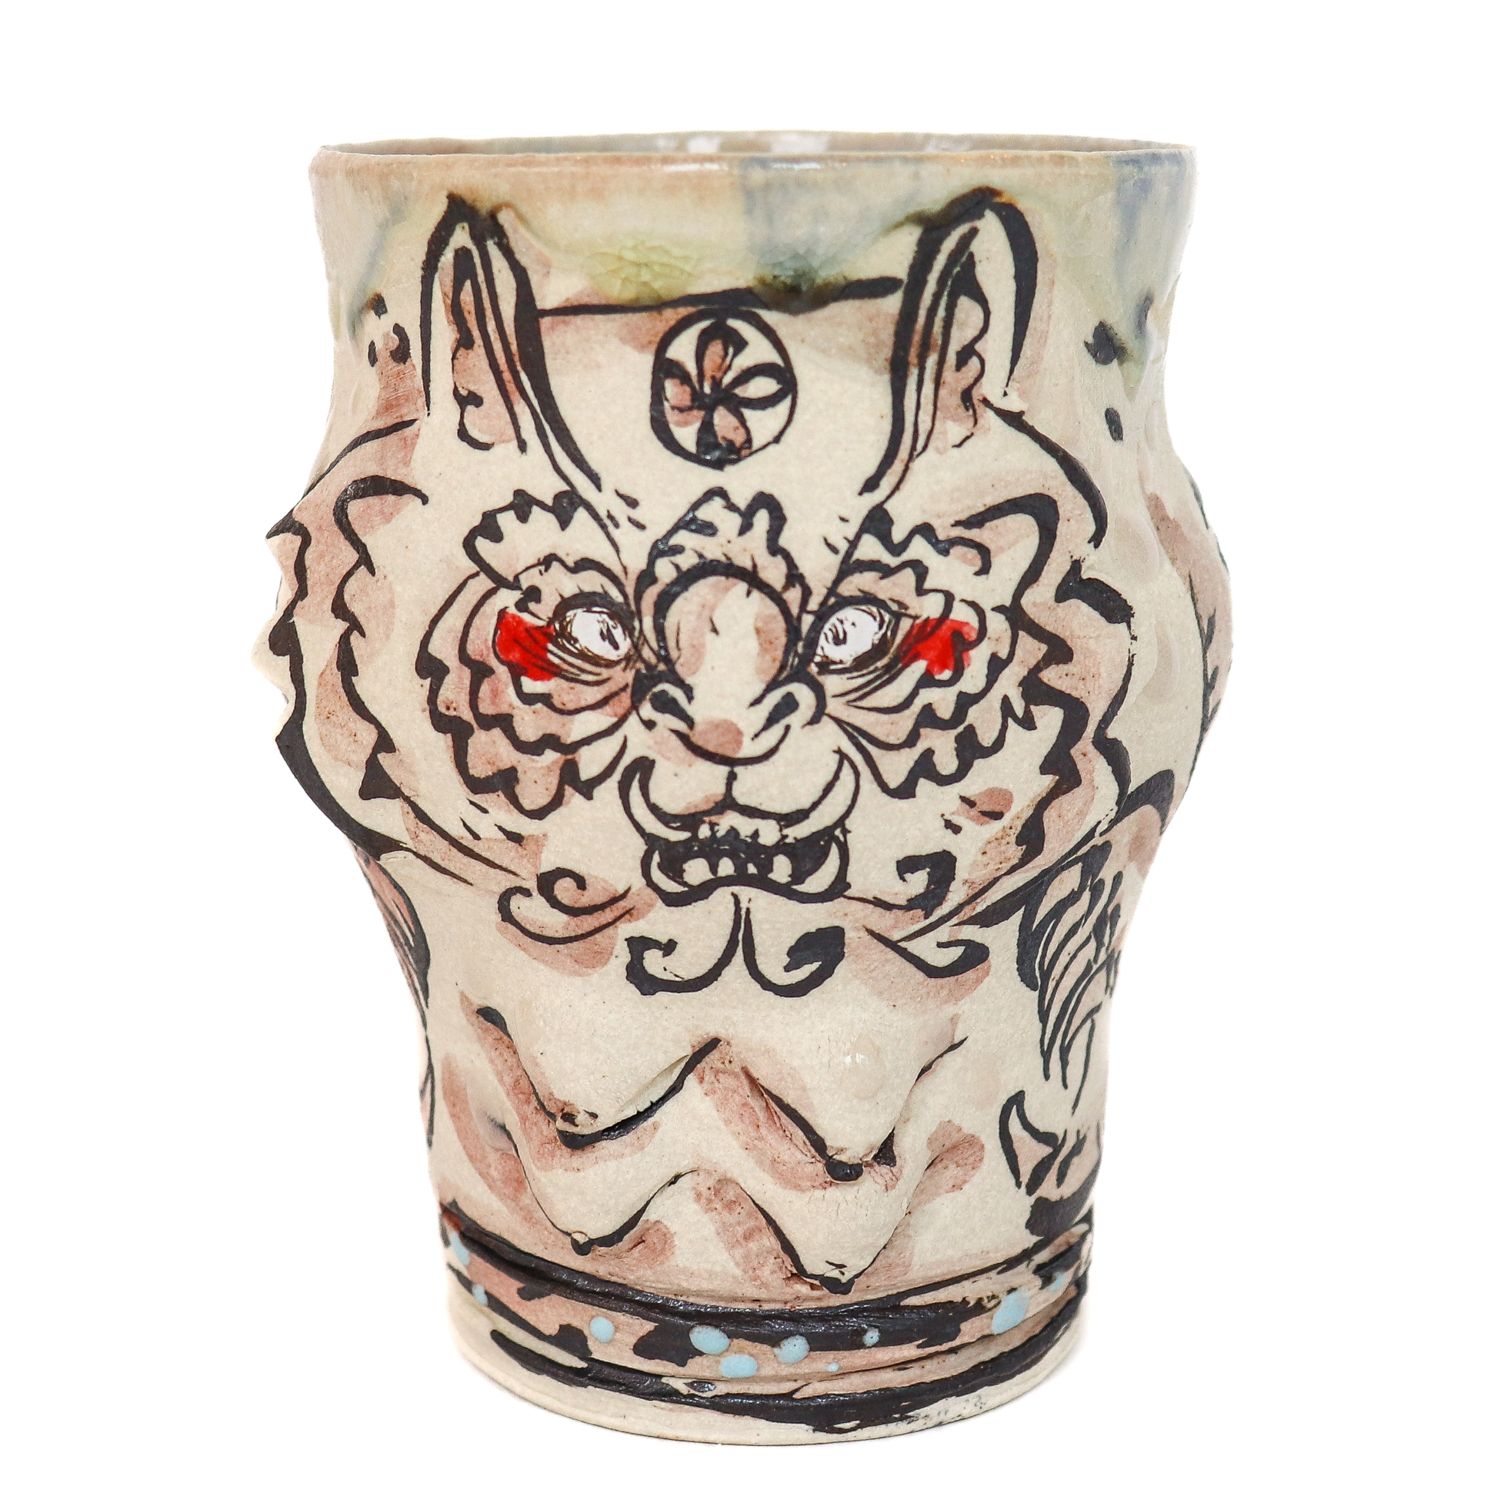 Sami Tsang: Dragon Cup Product Image 1 of 5